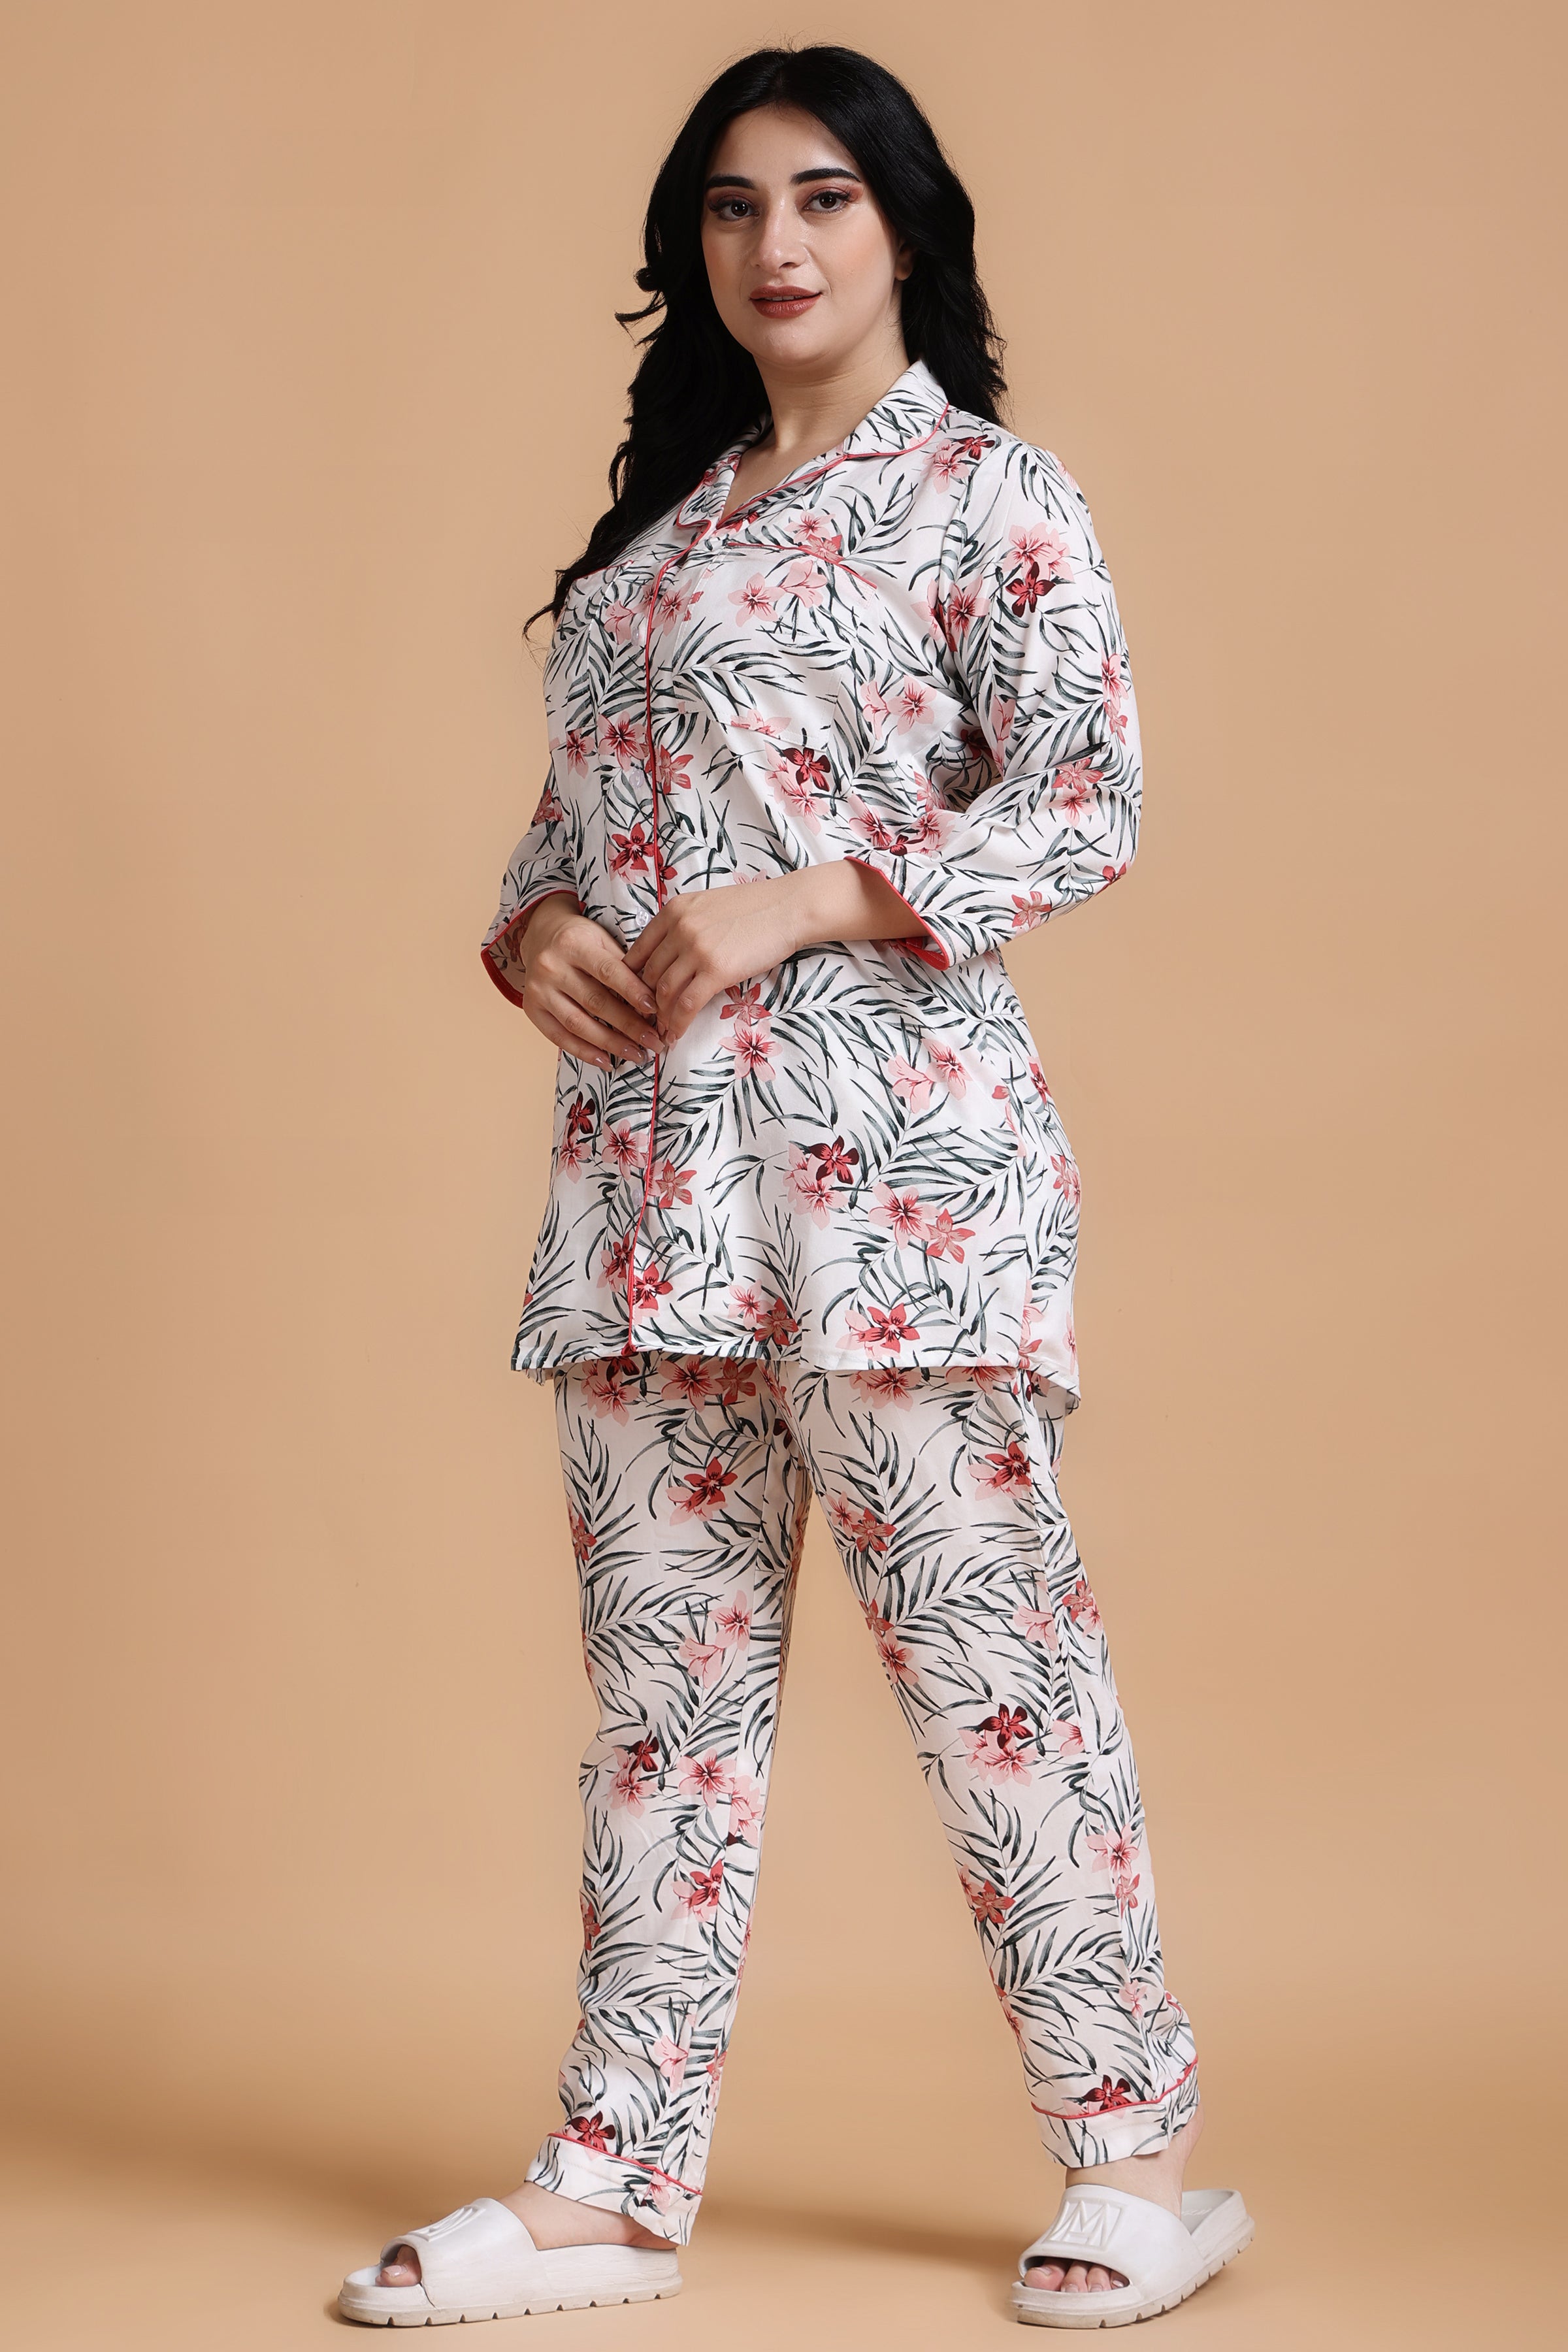 summer short sleepwear pajamas printed girls| Alibaba.com